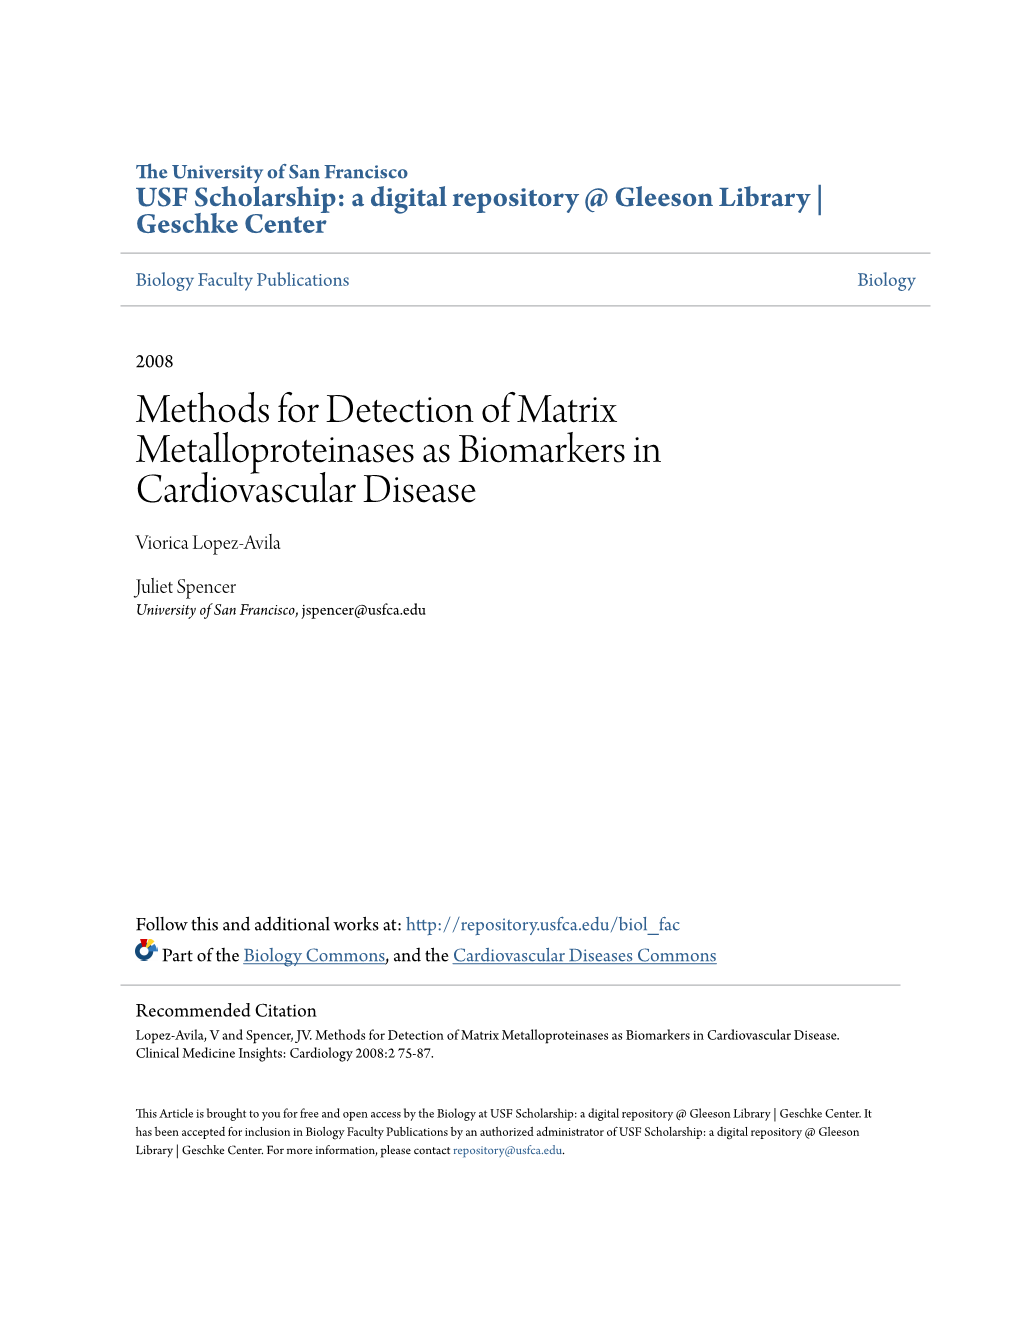 Methods for Detection of Matrix Metalloproteinases As Biomarkers in Cardiovascular Disease Viorica Lopez-Avila